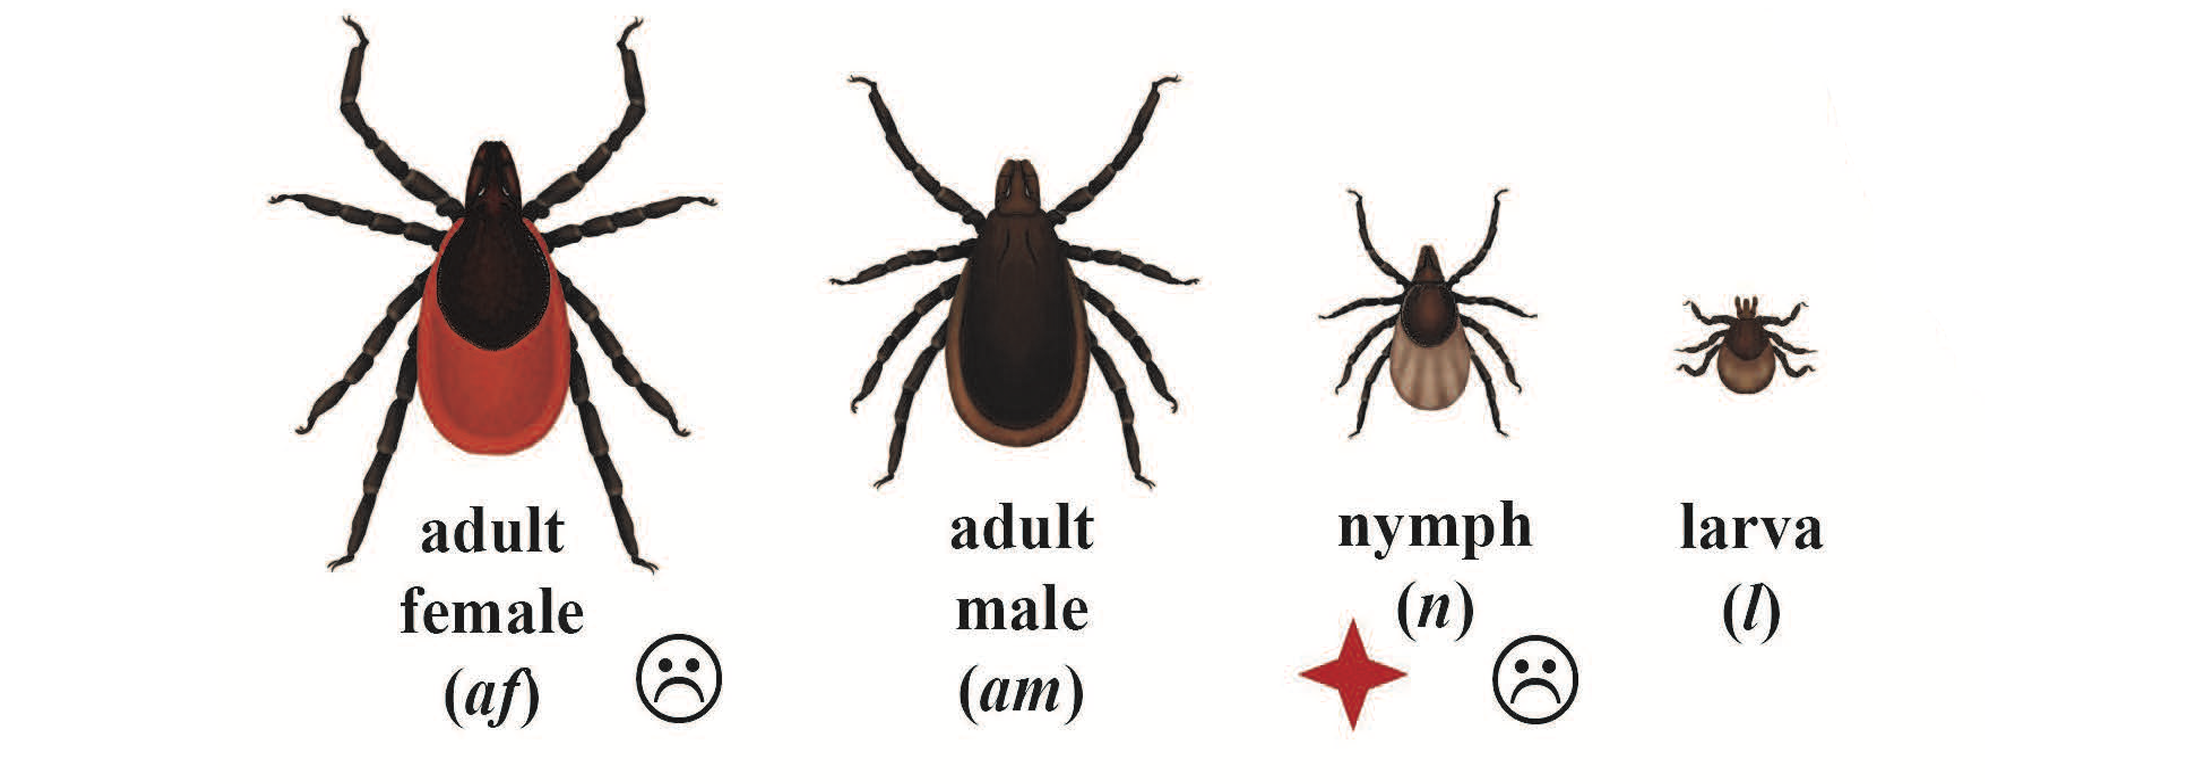 Illustration of Blacklegged Tick life cycle